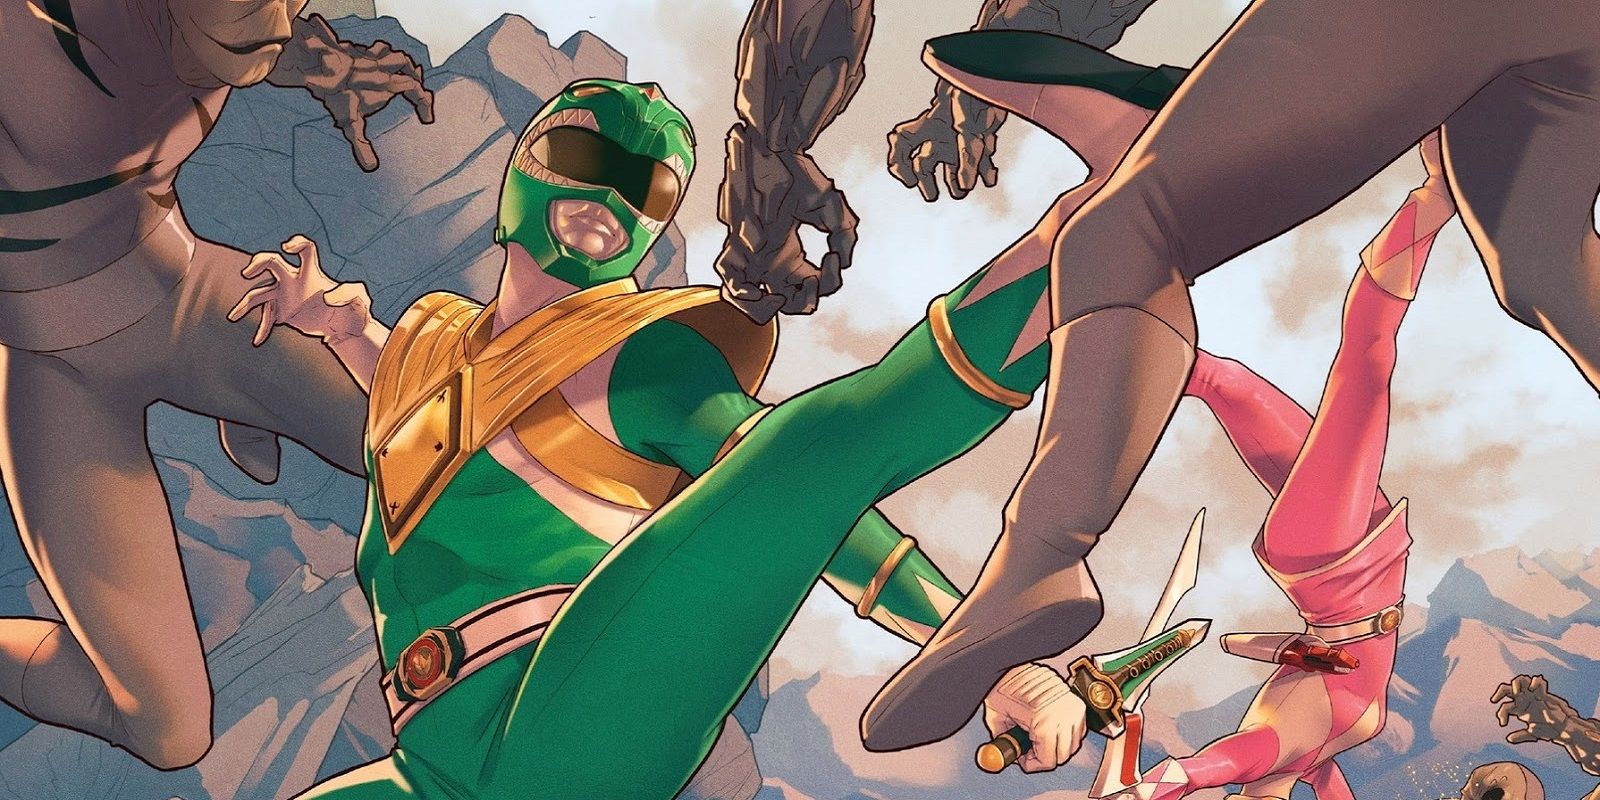 The Mighty Morphin Power Ranger fighting putties in the Boom Studios comics